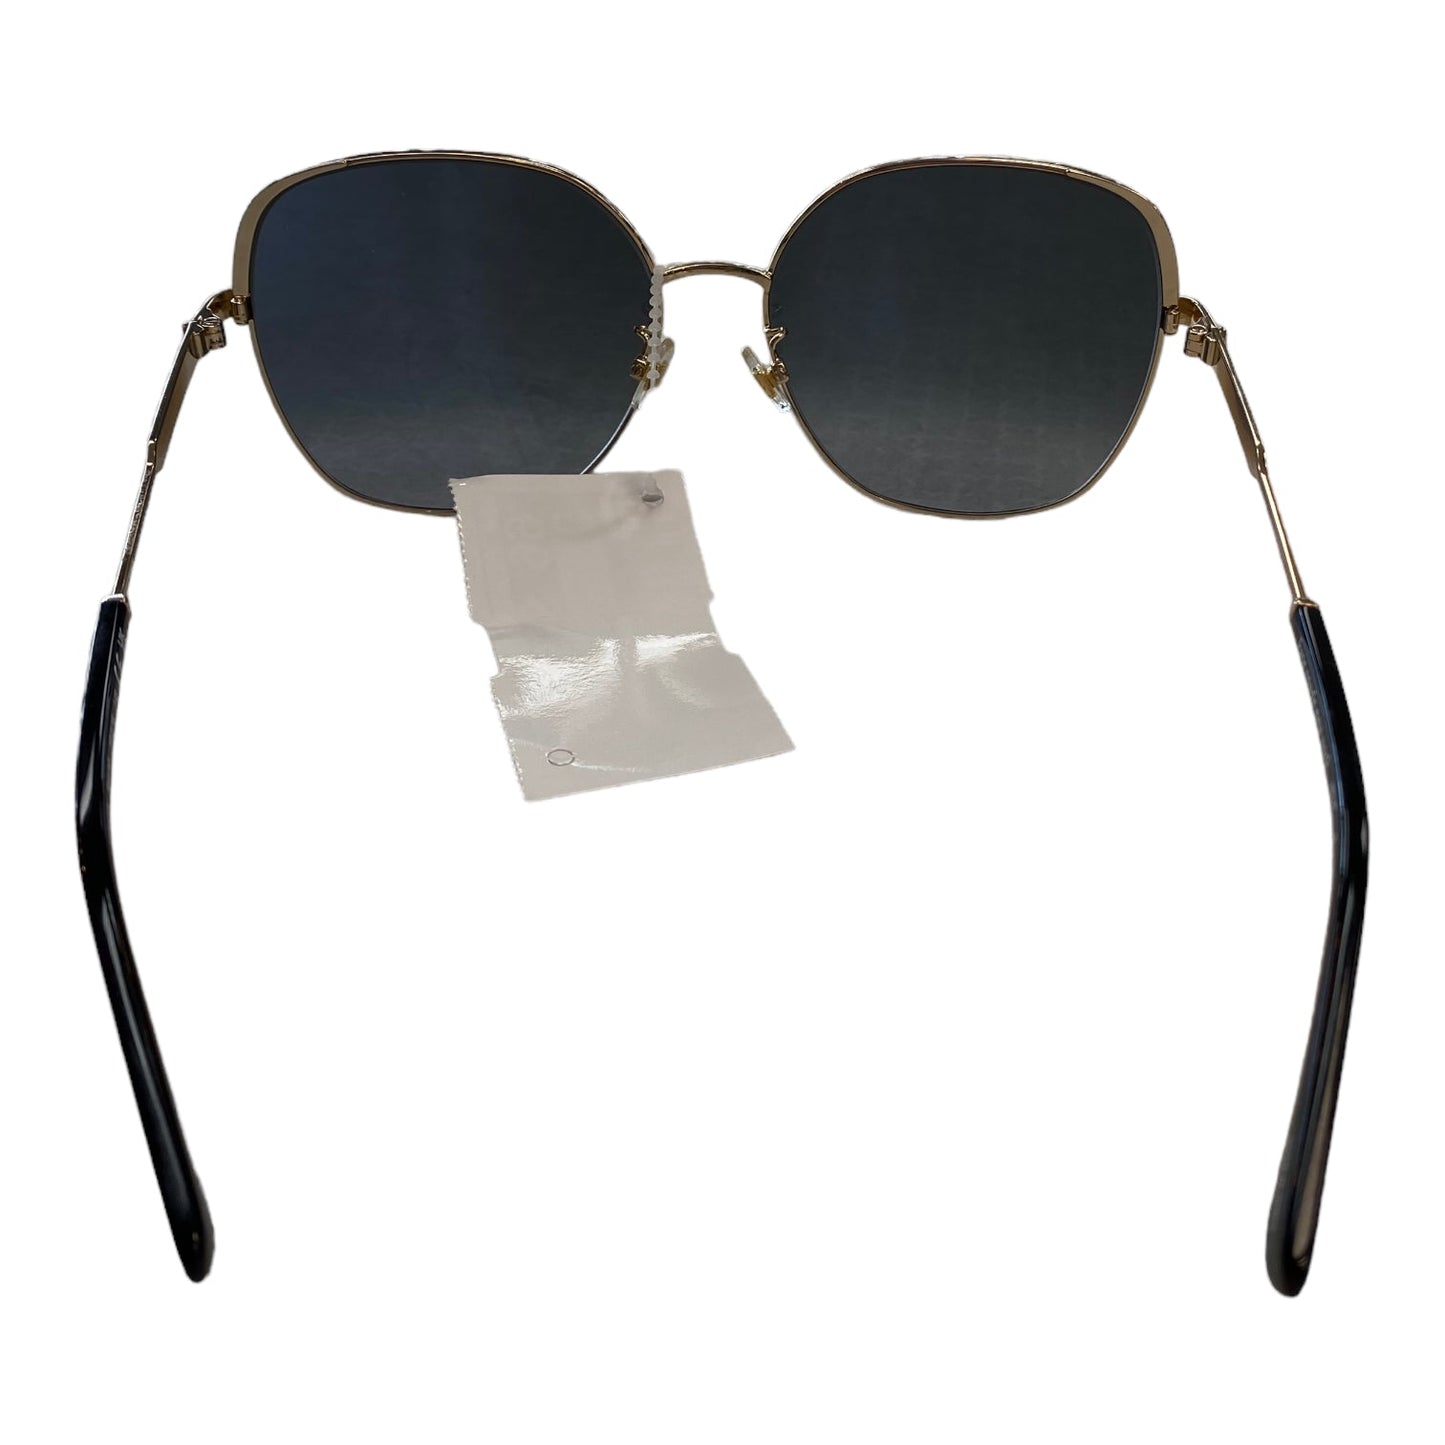 Sunglasses Designer Kate Spade